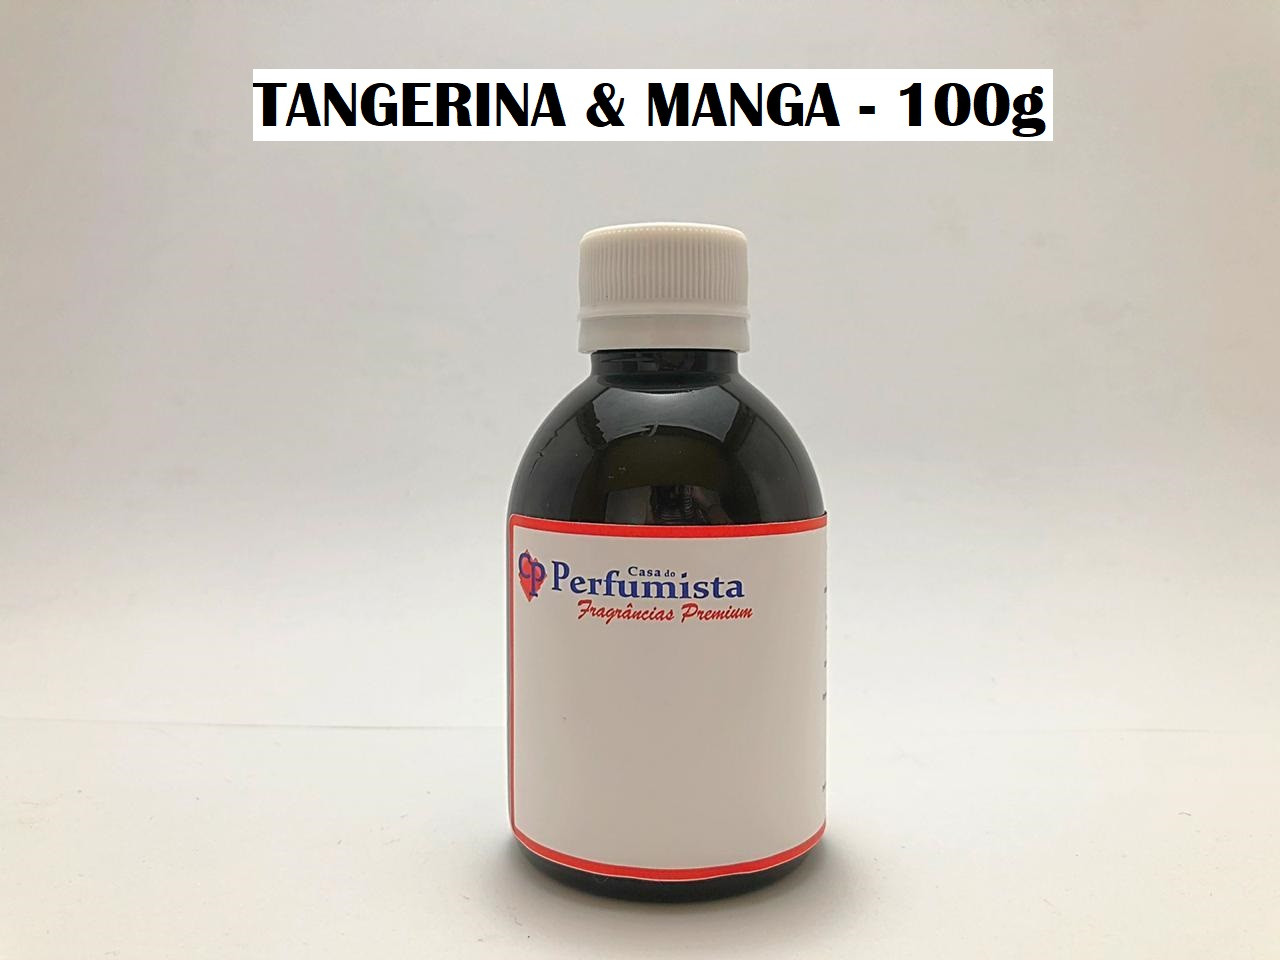 TANGERINA E MANGA - 100g